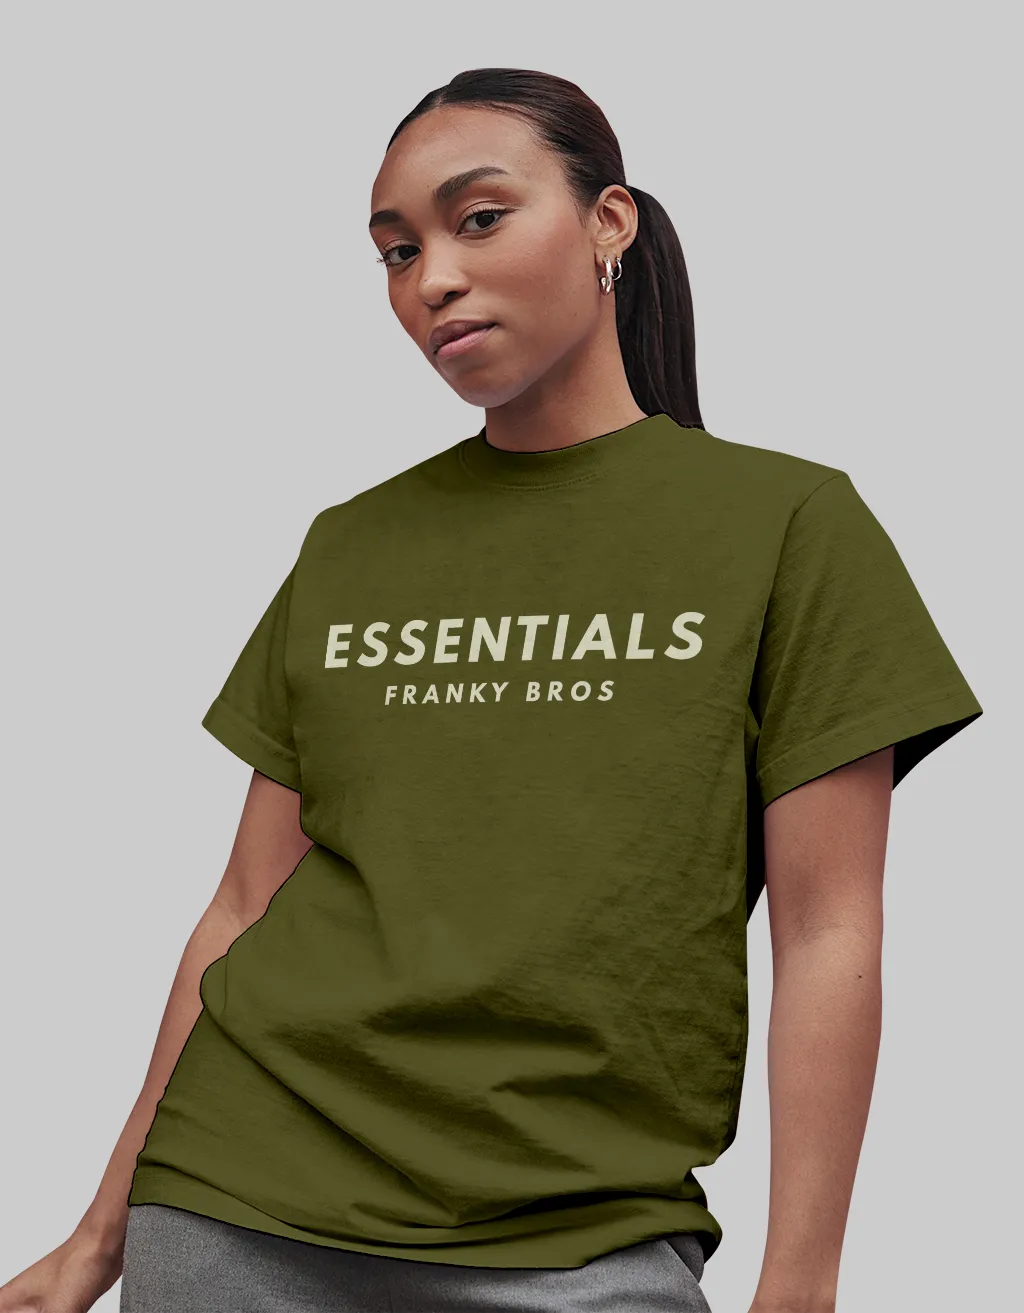 https://frankybros.com/wp-content/uploads/2022/10/essentials-t-shirt-olive-green-t-shirt-for-women-and-men-online-india.webp